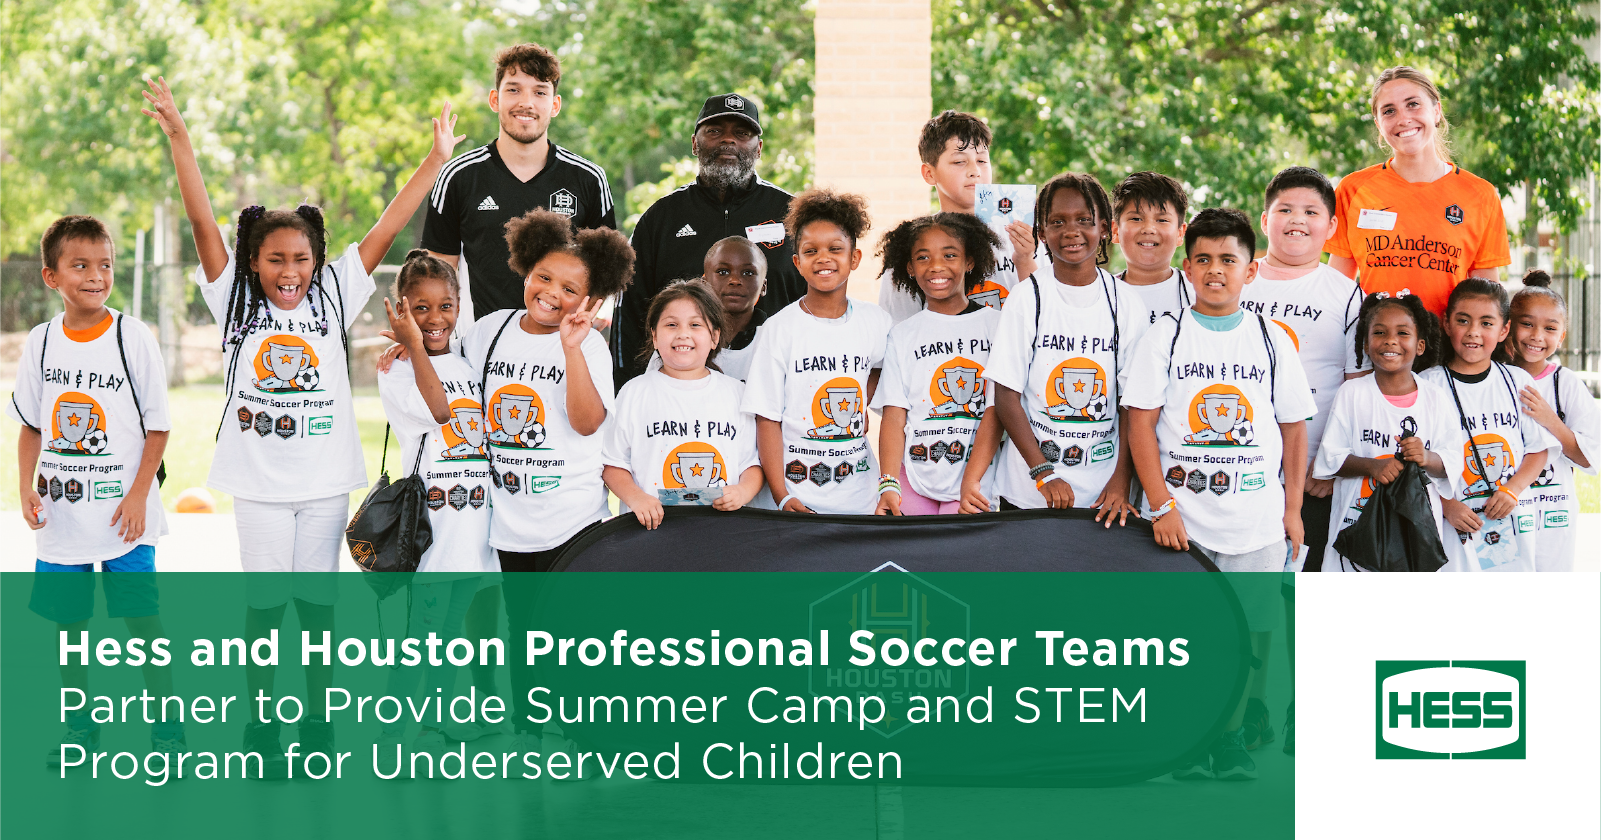 Hess Provides Summer Soccer Camp and STEM Program for Underserved Children